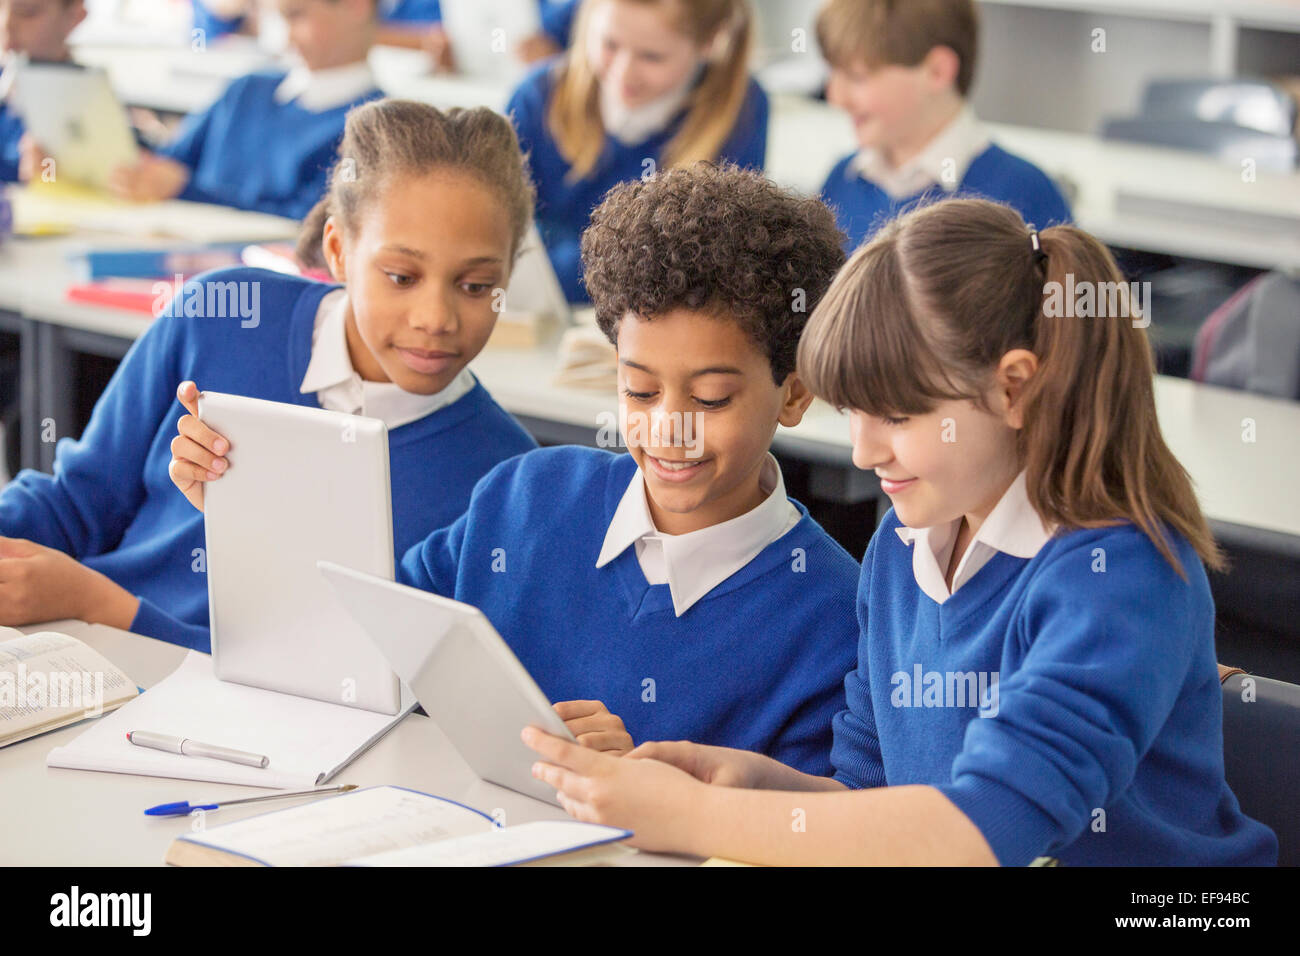 Elementary school children wearing blue school uniforms using digital tablets at desk in classroom Stock Photo